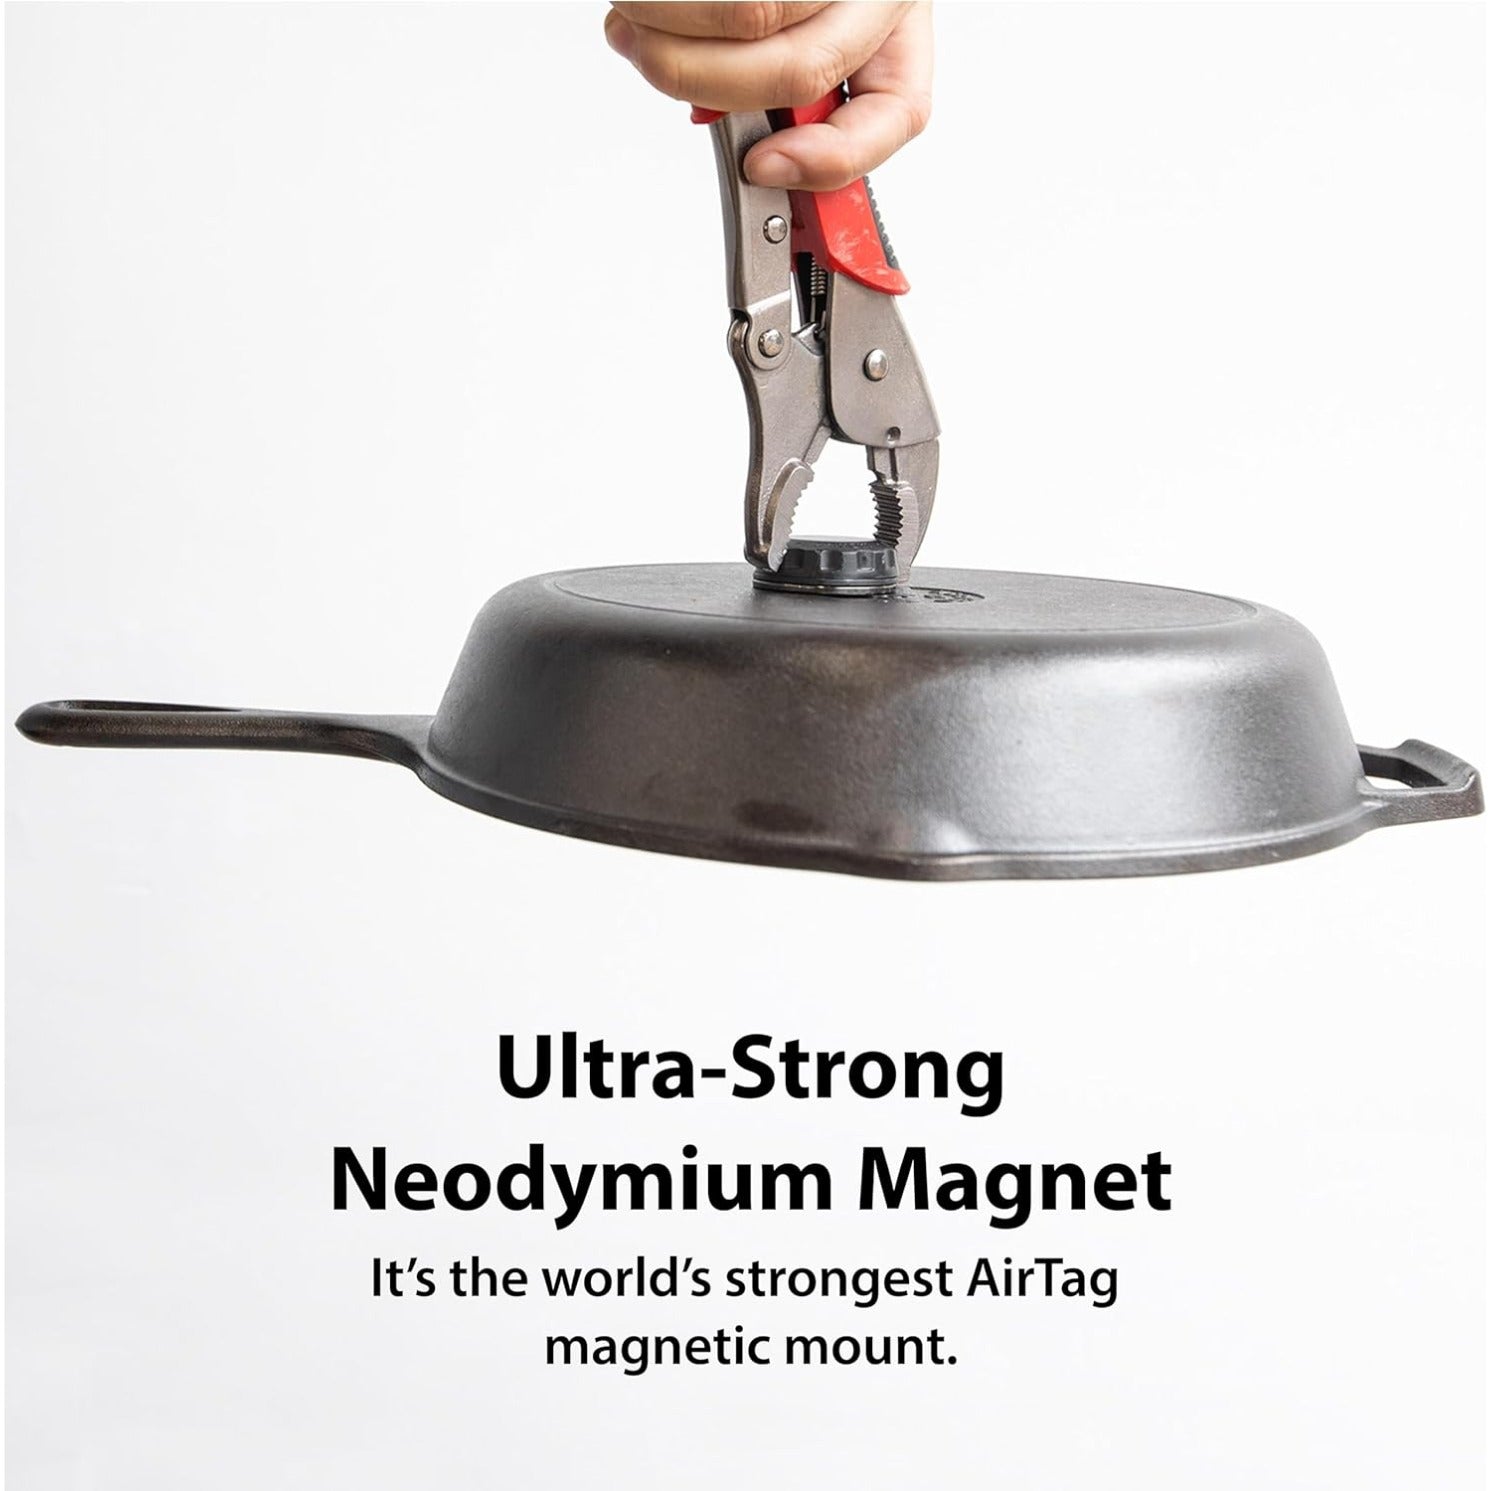 TagVault Magnetic Soporte Magnético Impermeable para AirTag